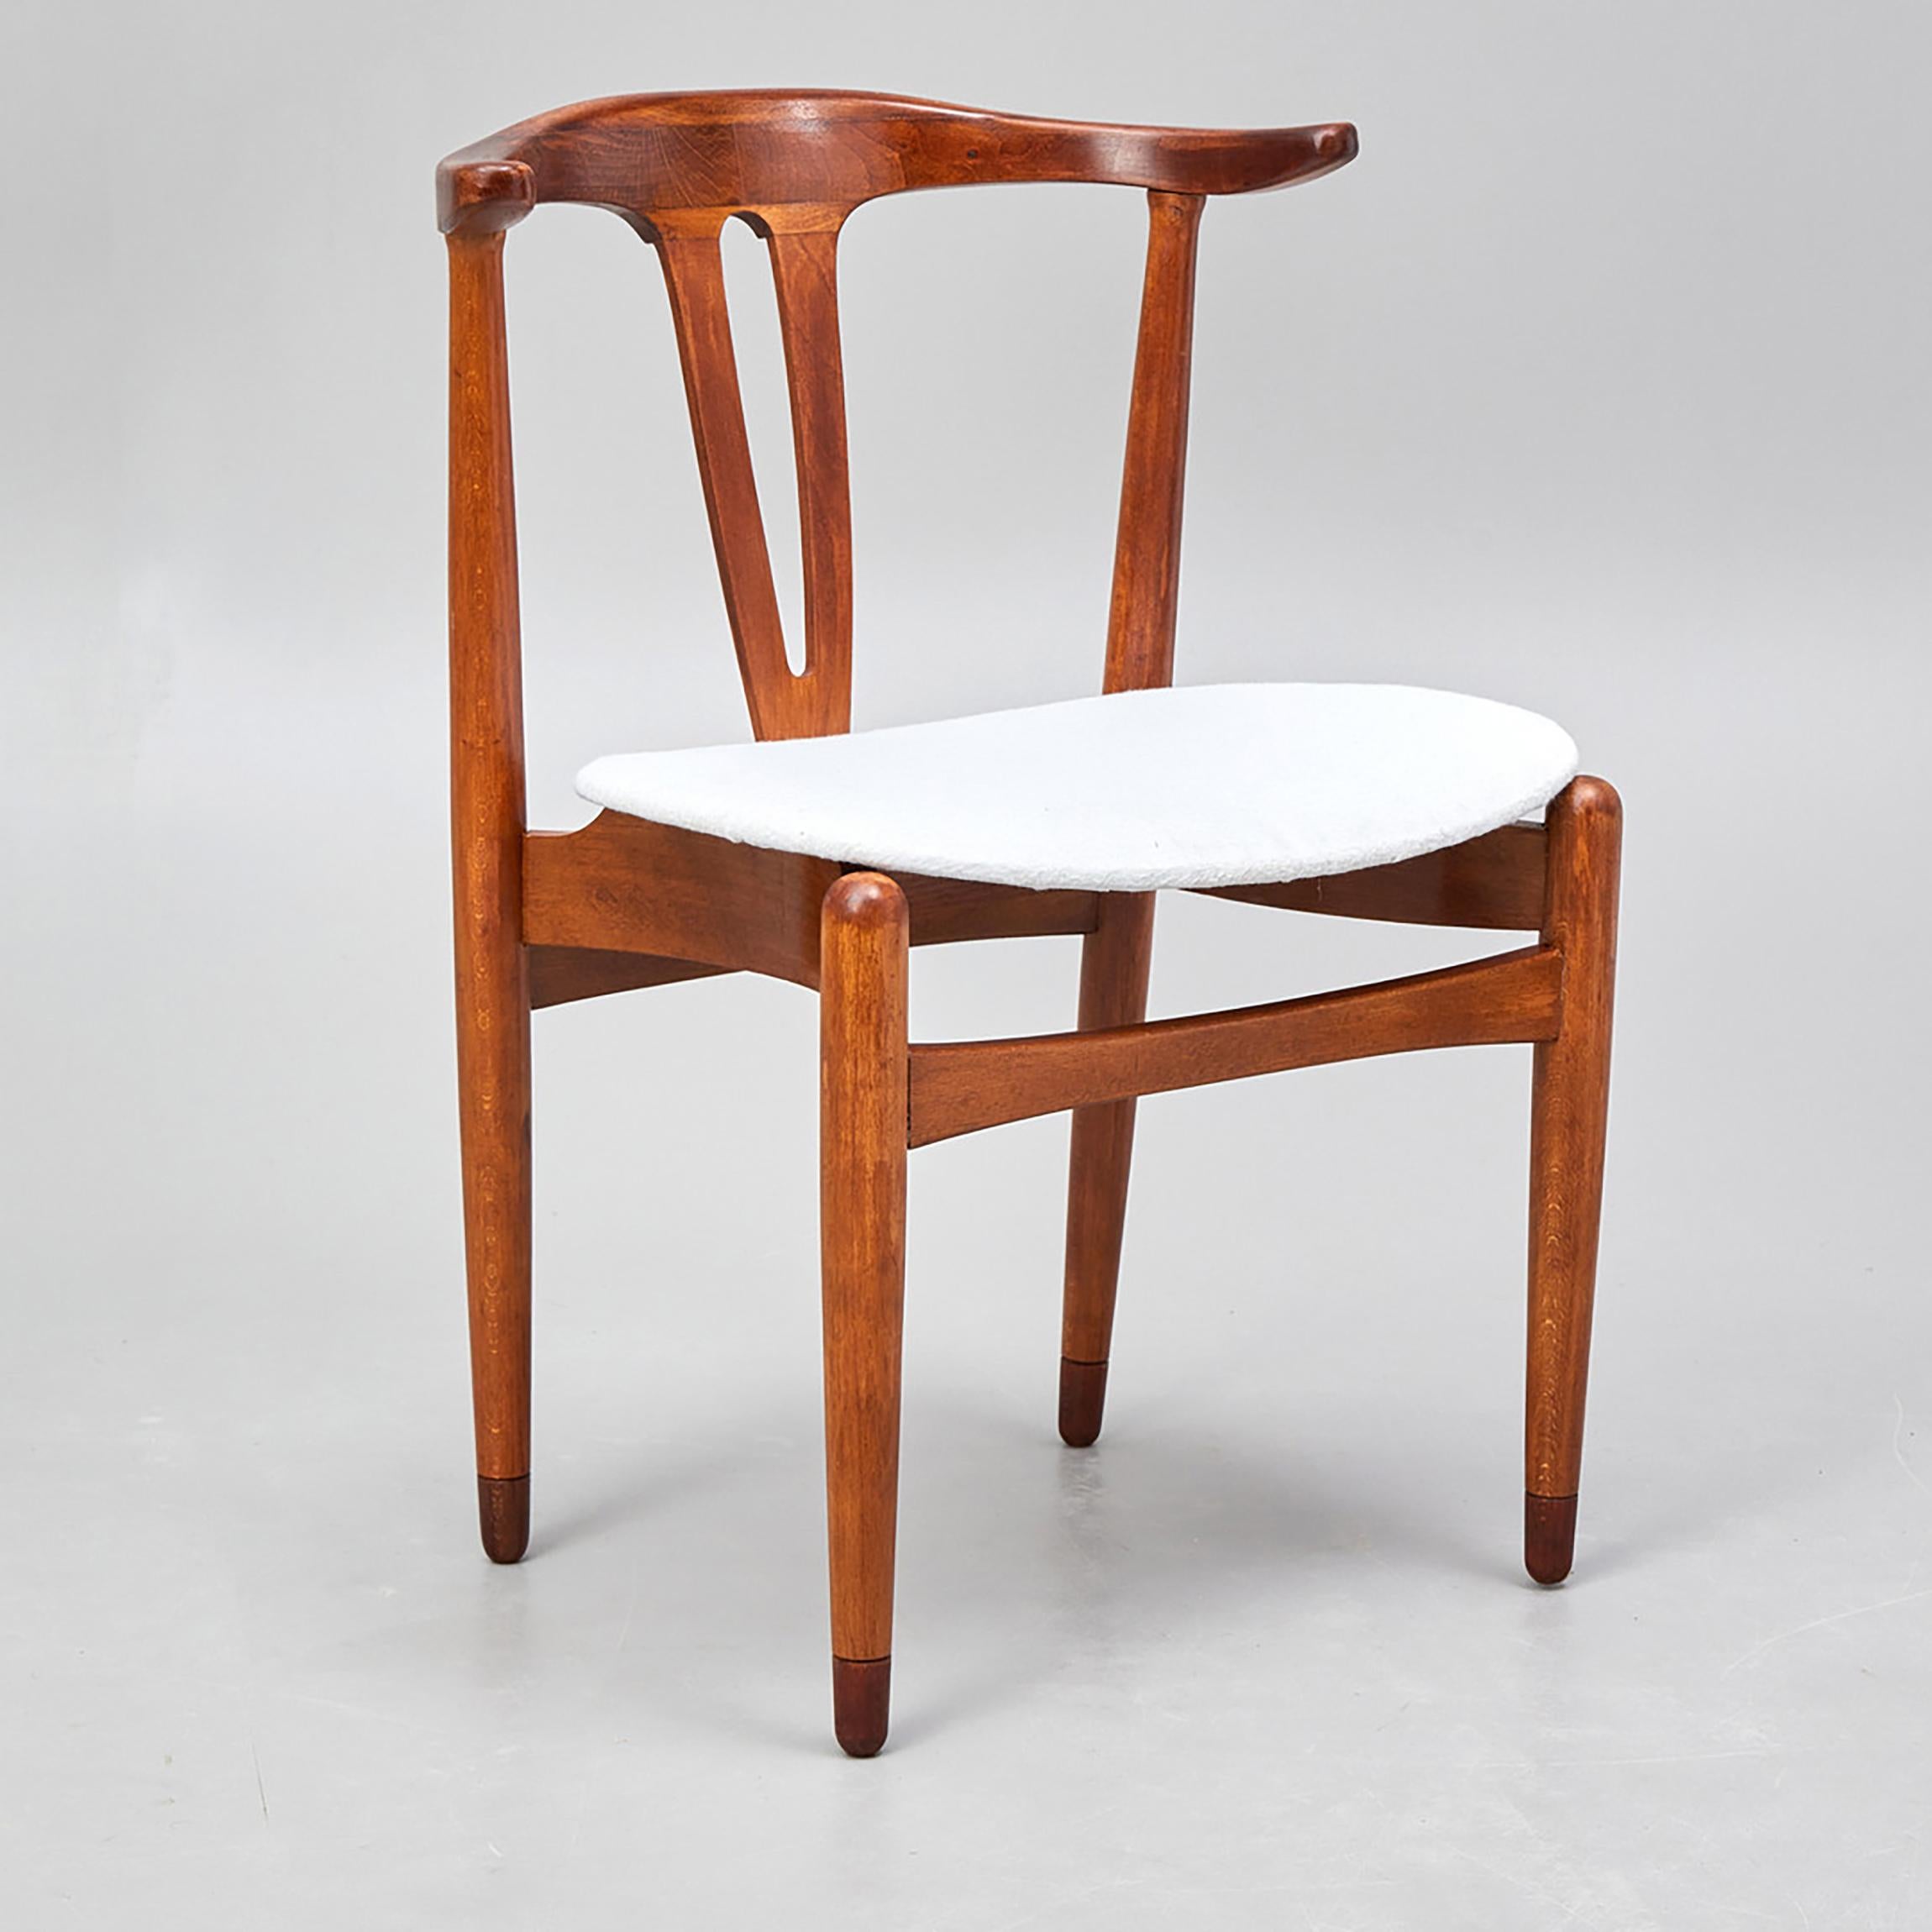 Mid-20th Century Danish Midcentury Hardwood Side Chair For Sale